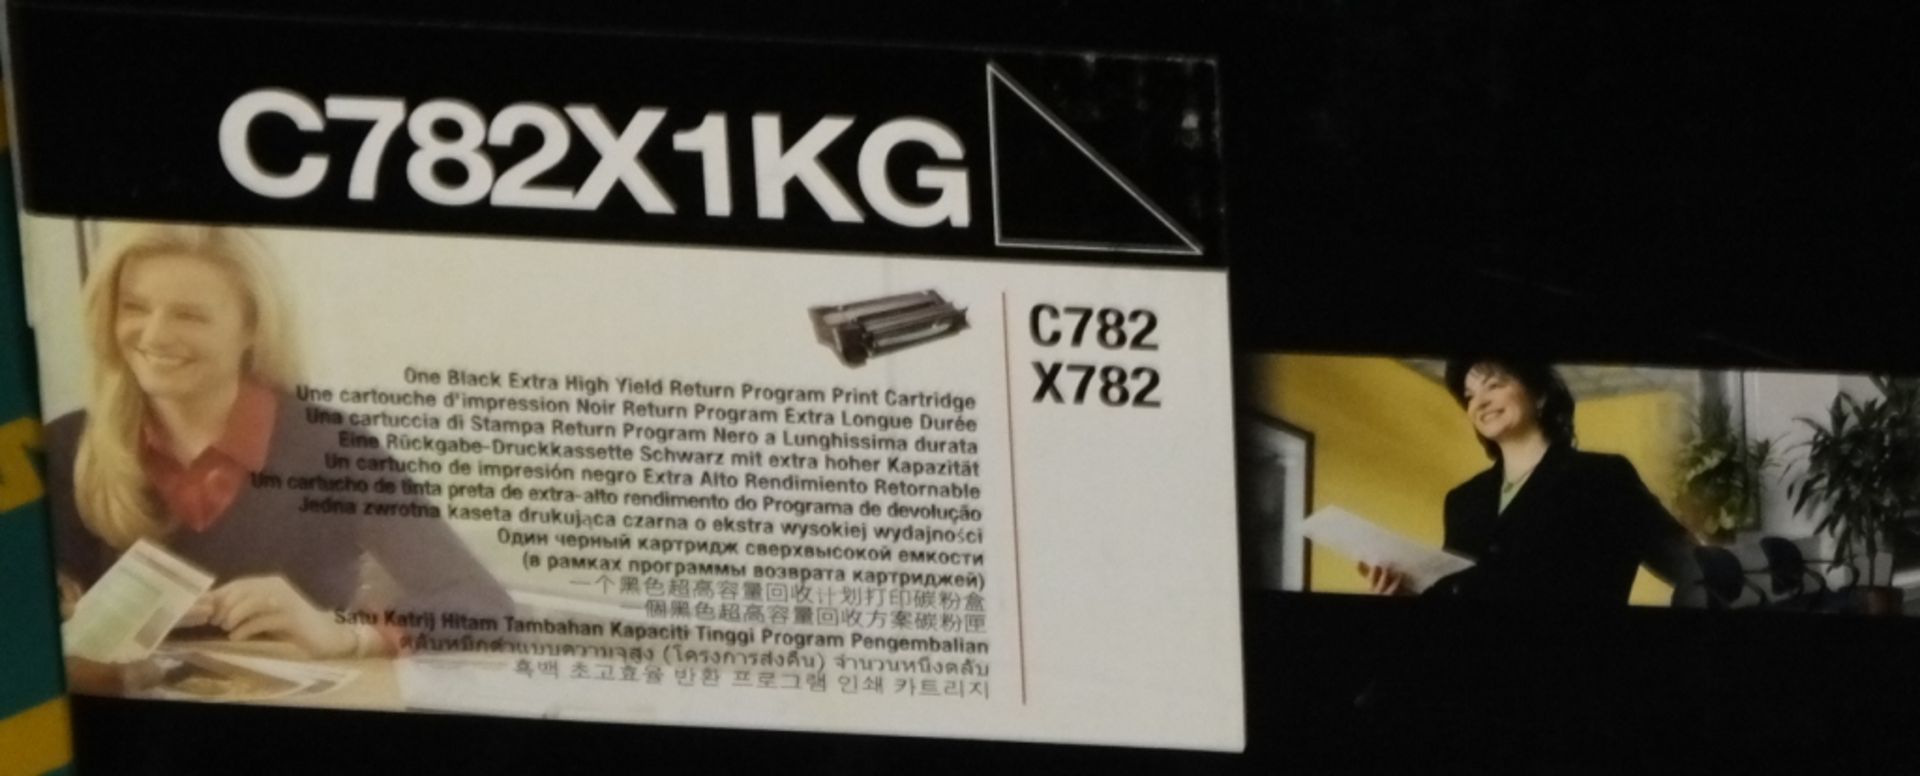 Lexmark C782X1KG - C782X782 - printer cartridge - Image 2 of 2